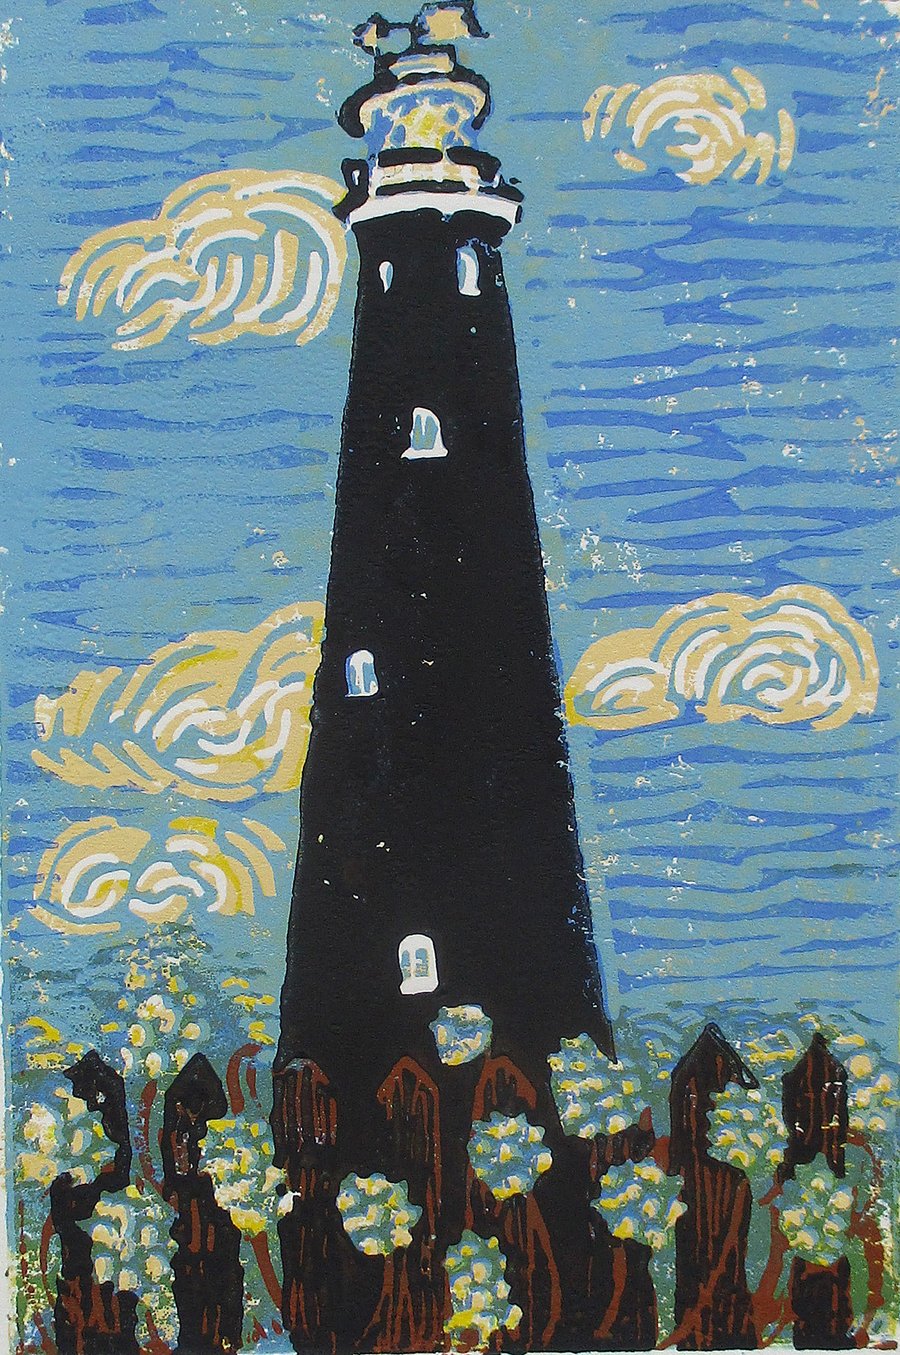 Dungeness Old Lighthouse, Kent - Original Hand Pressed Linocut Print on Paper